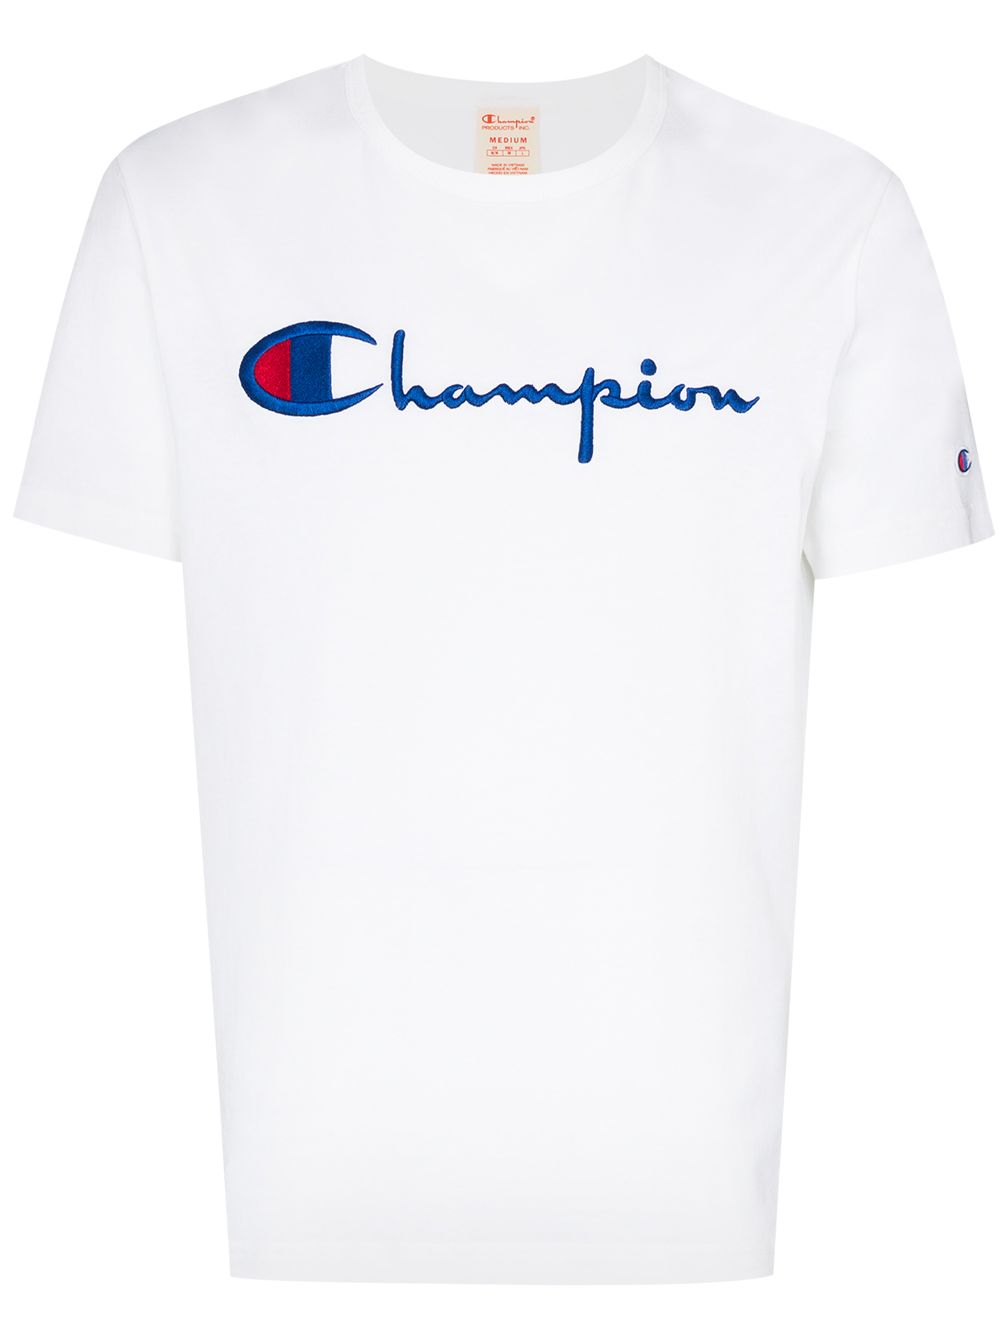 Champion футболка с вышитым логотипом от Champion